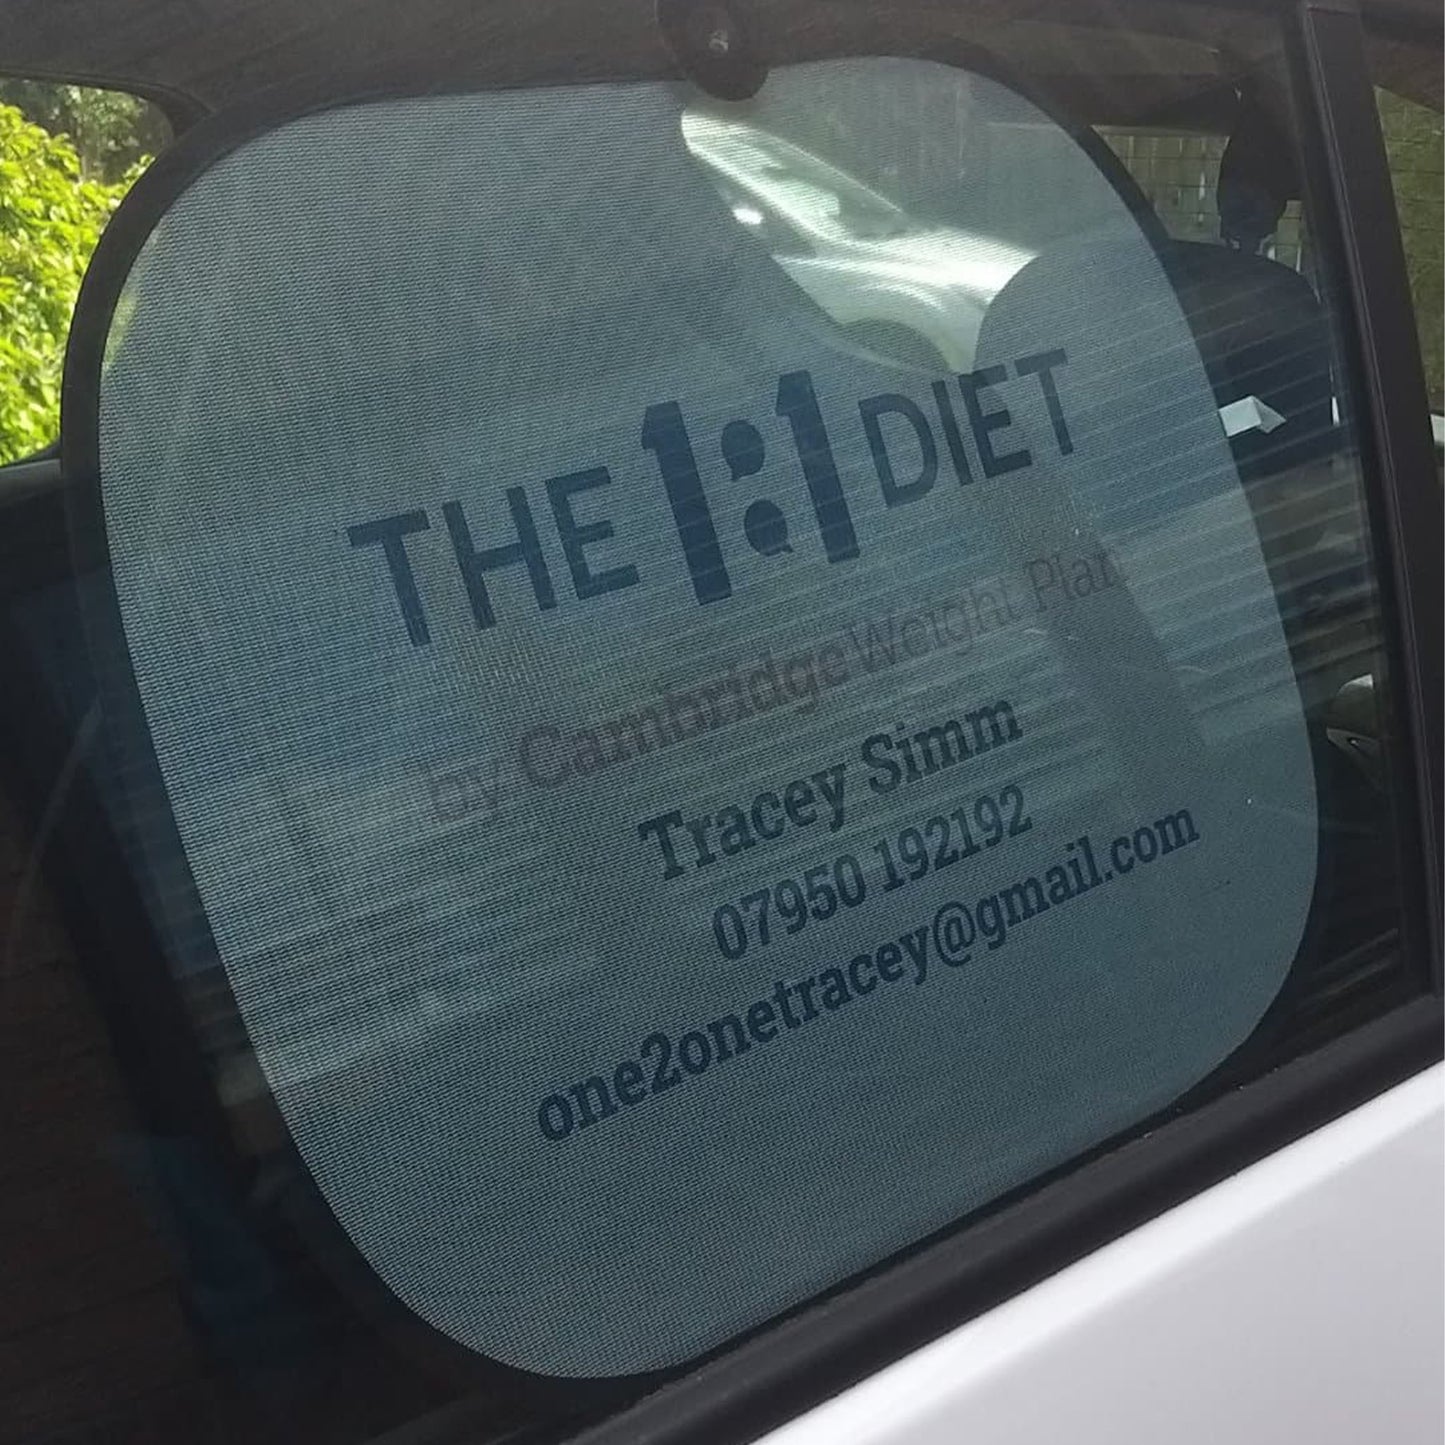 The 1:1 Diet - Car Window Shades